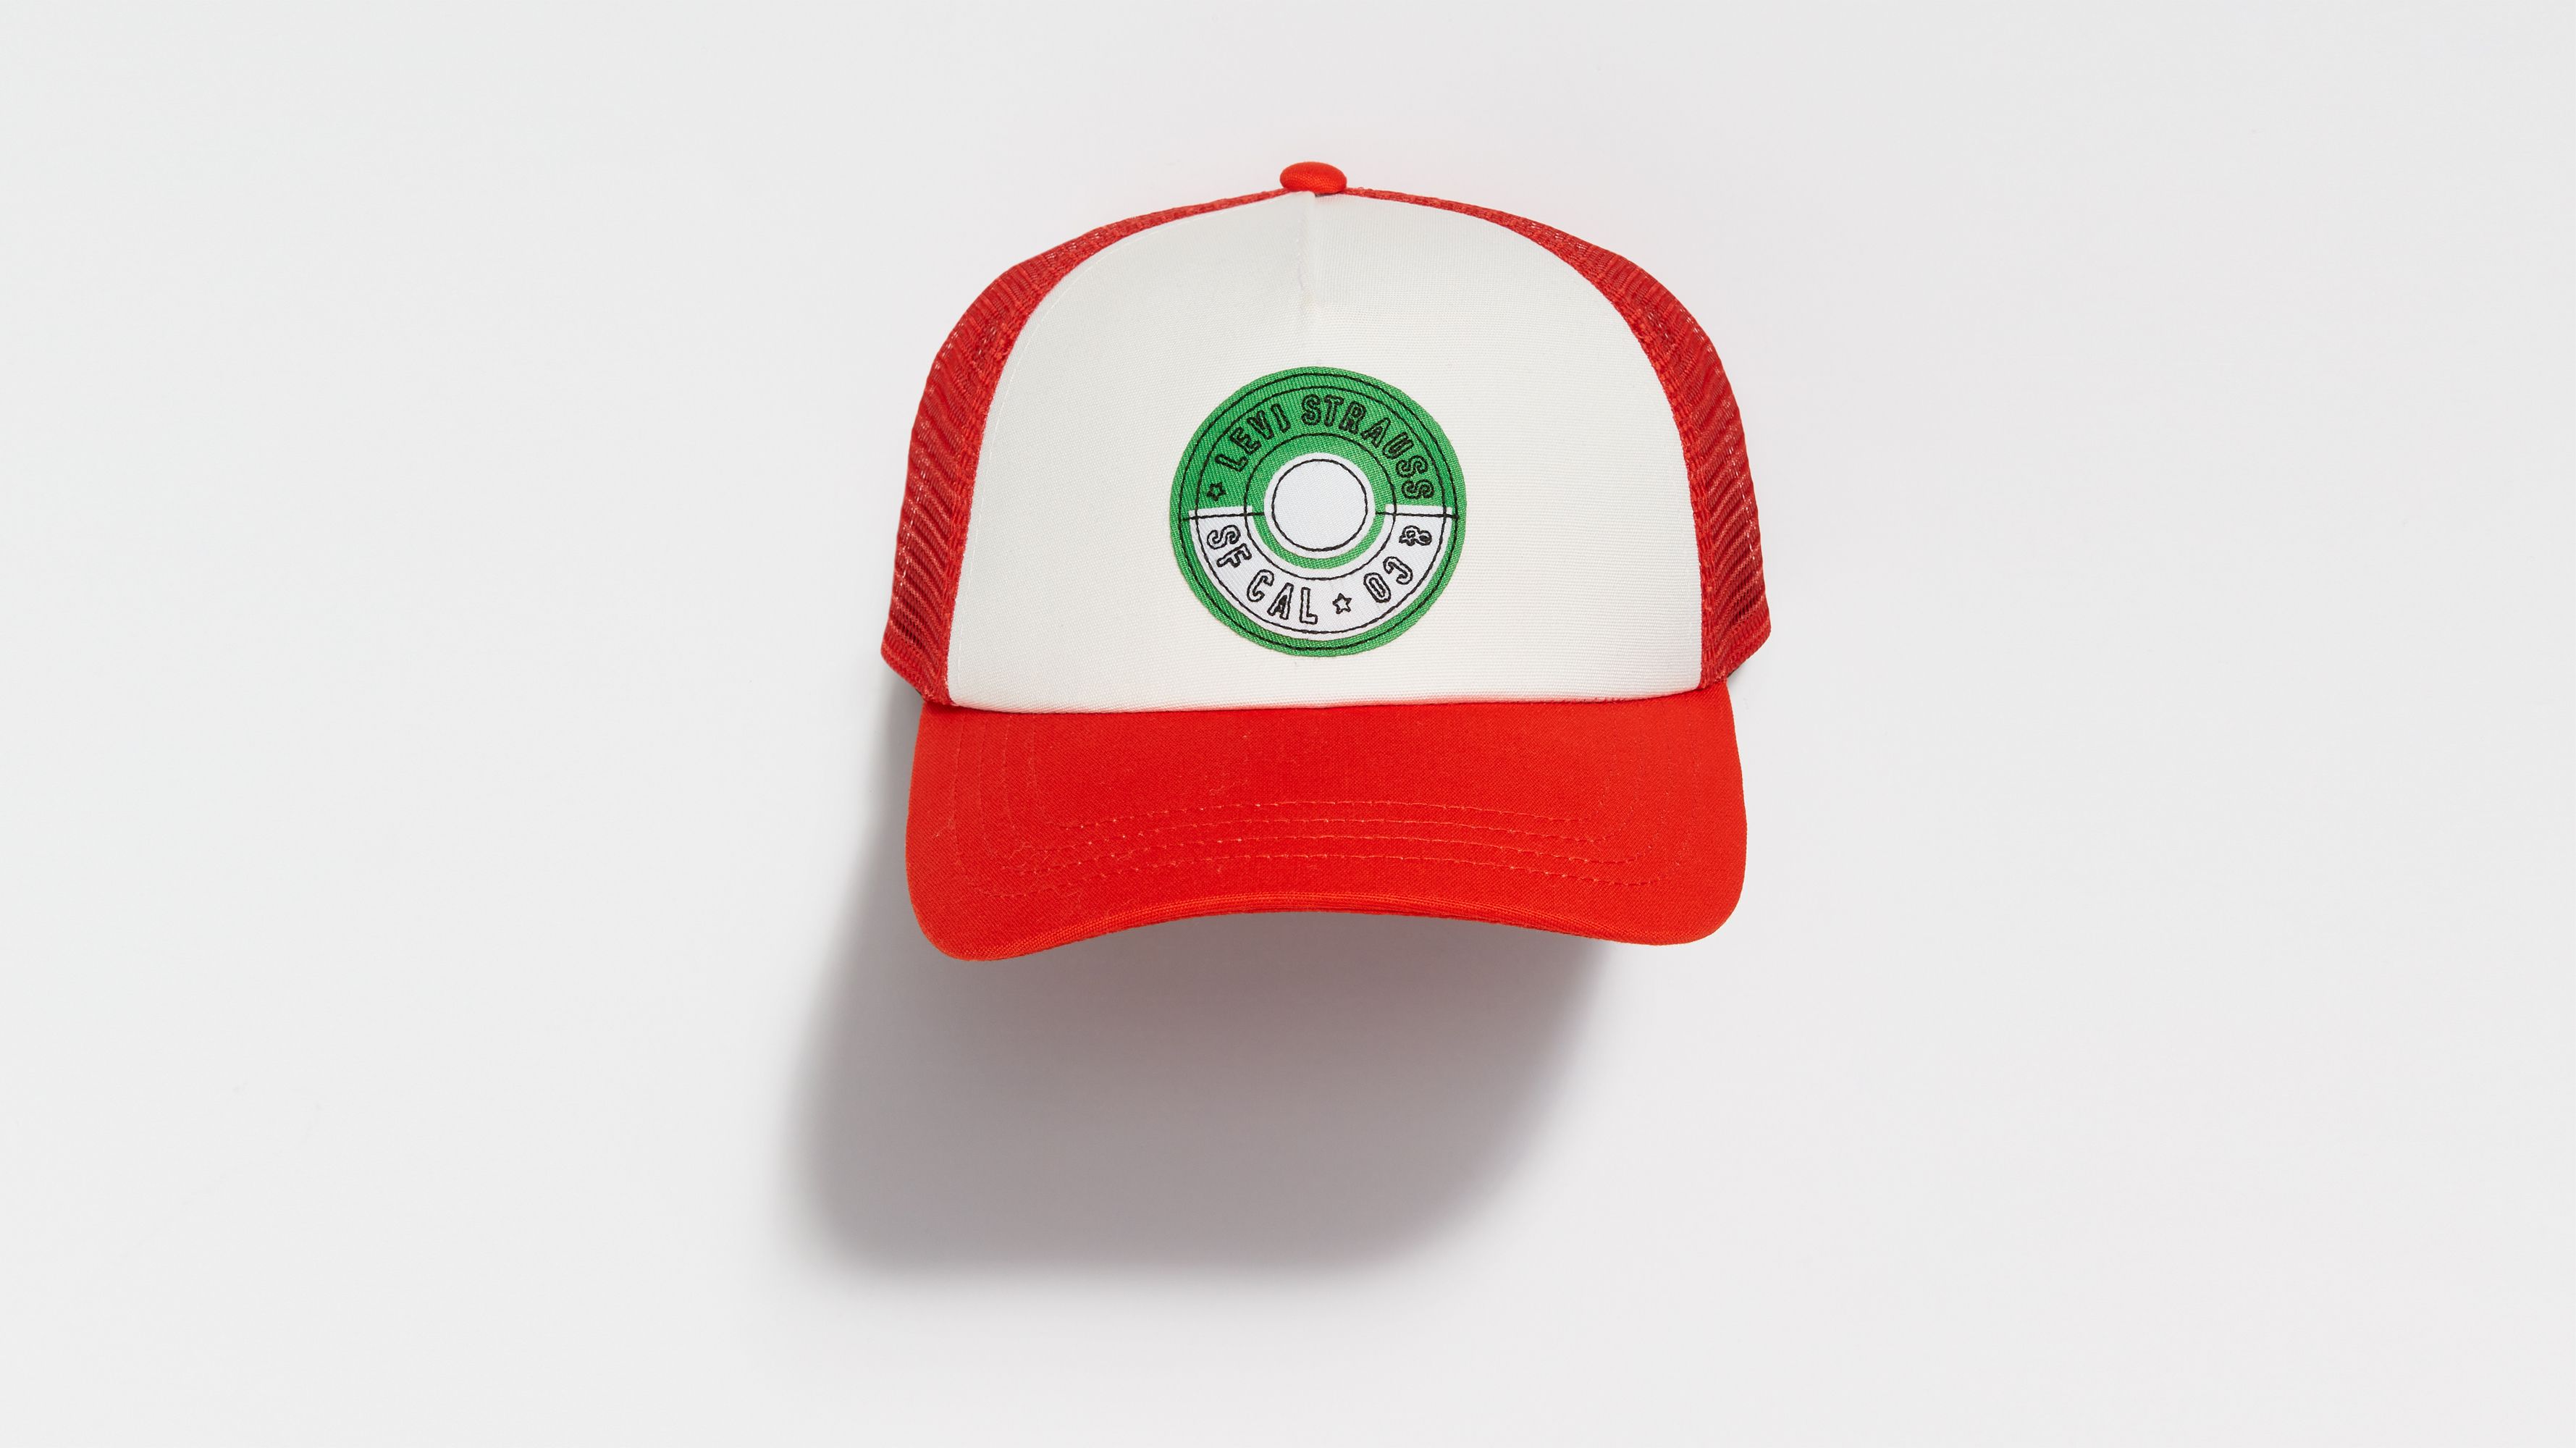 levis trucker hat